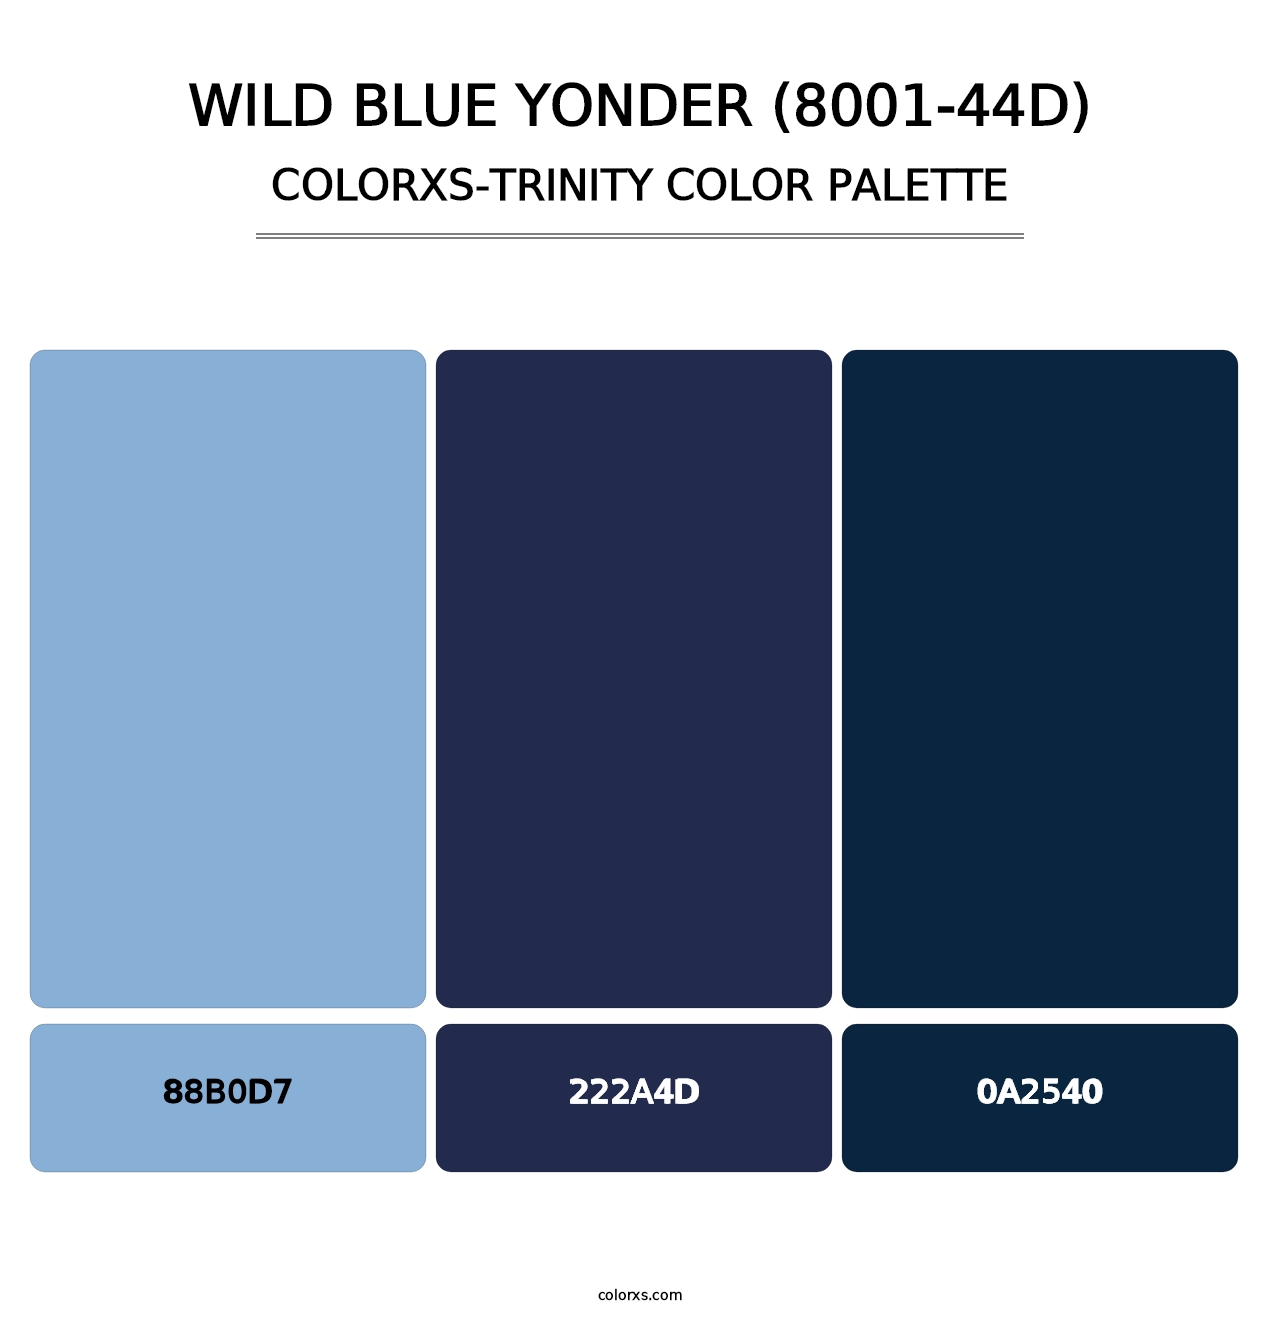 Wild Blue Yonder (8001-44D) - Colorxs Trinity Palette